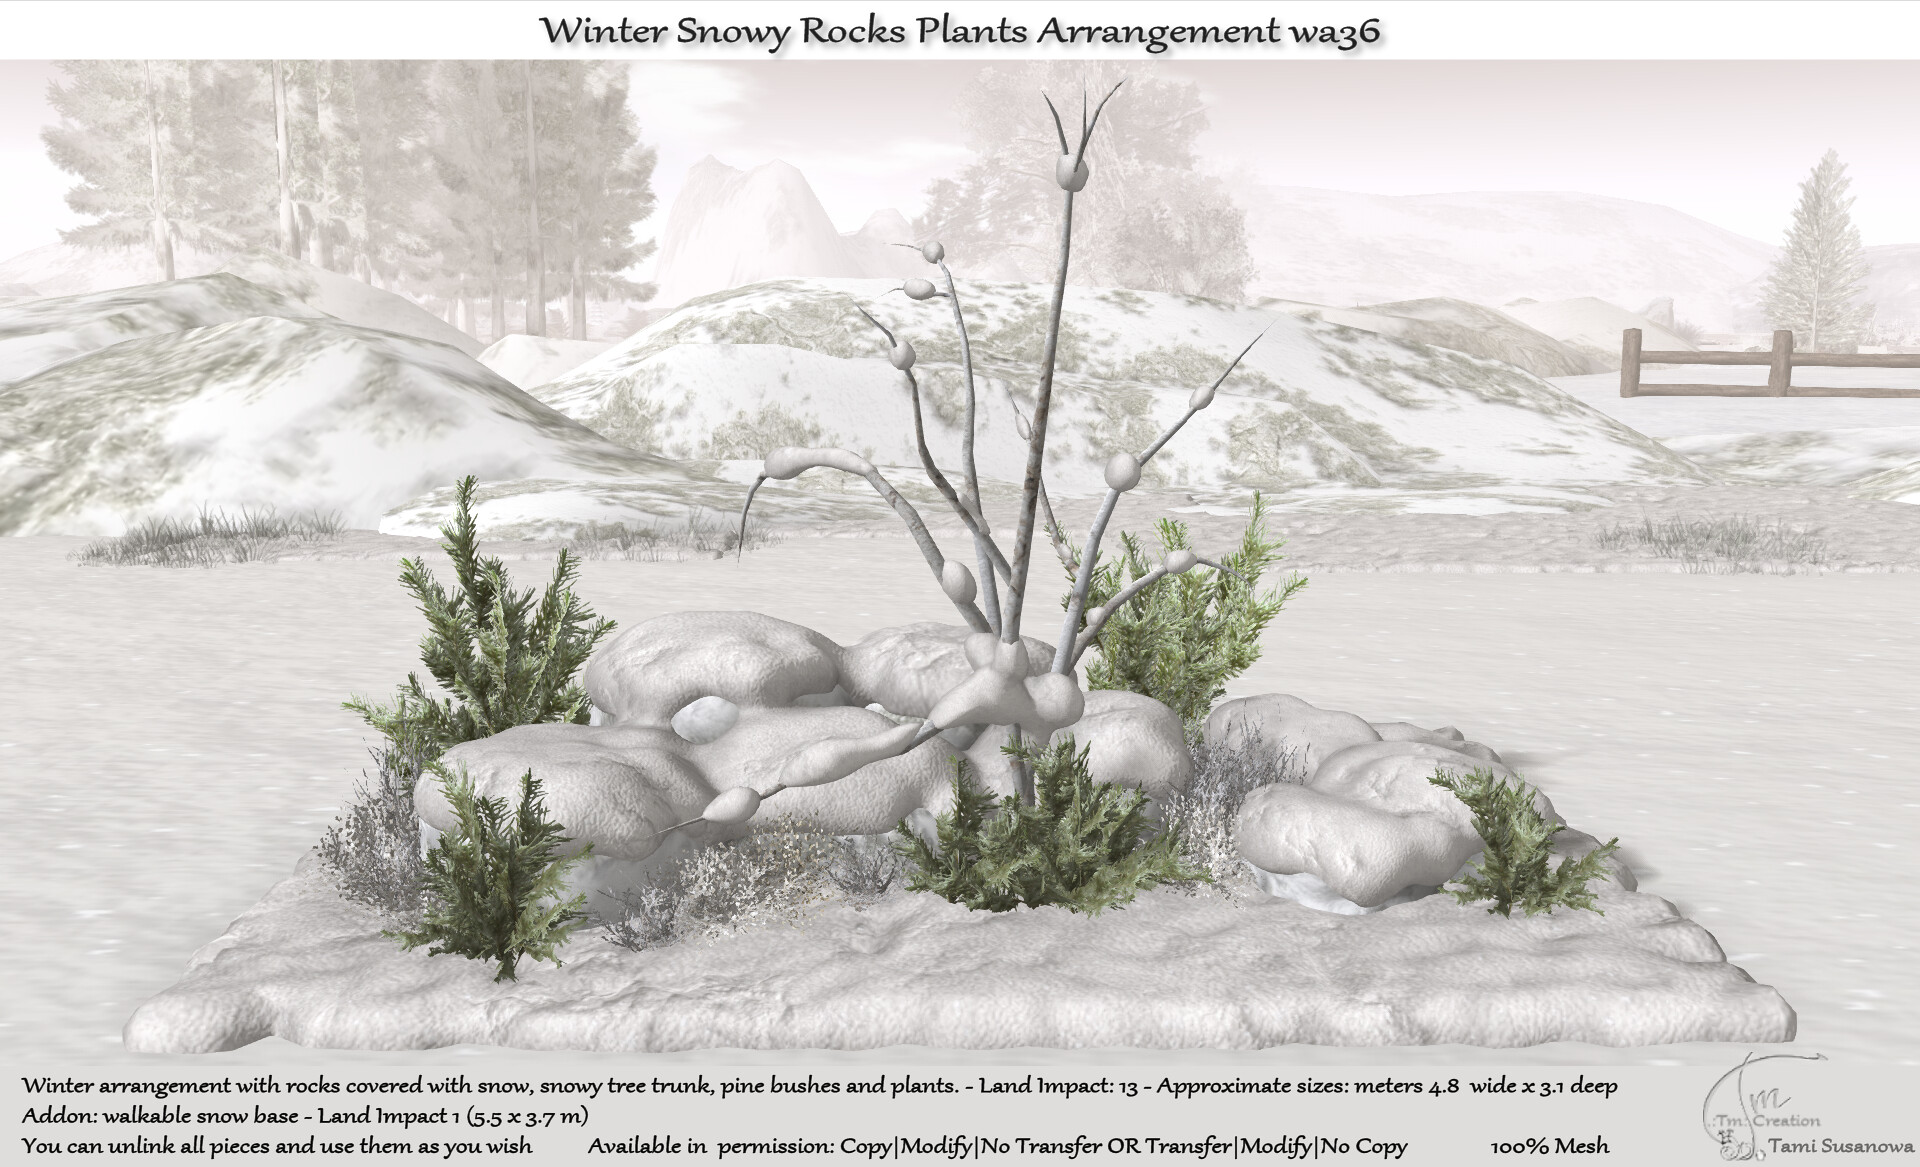 Tm Creation – Winter Snowy Rocks Plants Arrangement